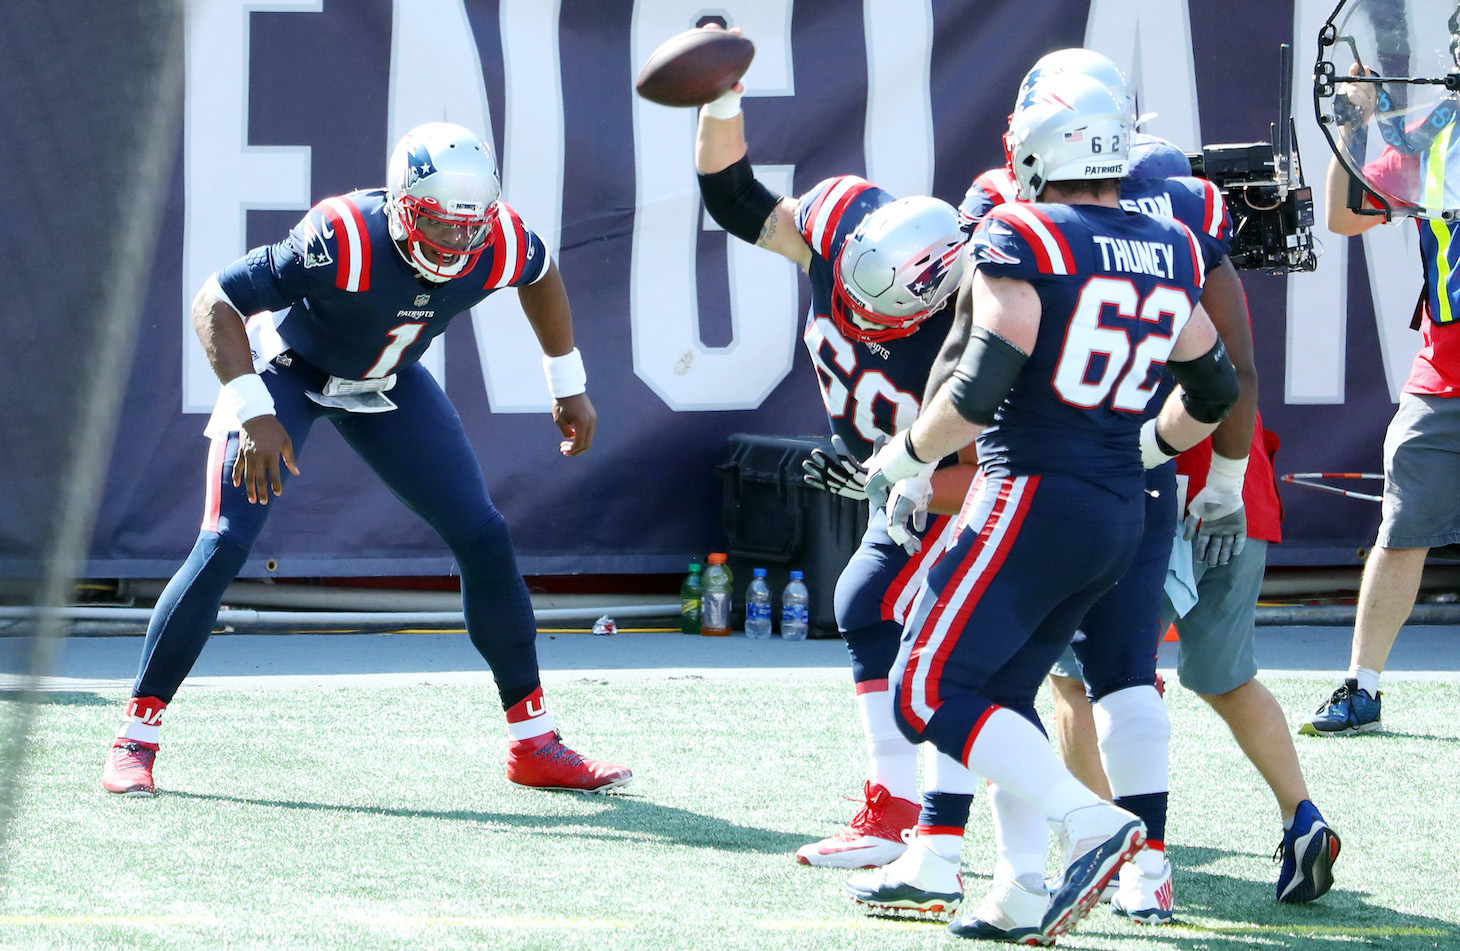 Cam Newton celebrates touchdown with Patriots teammates